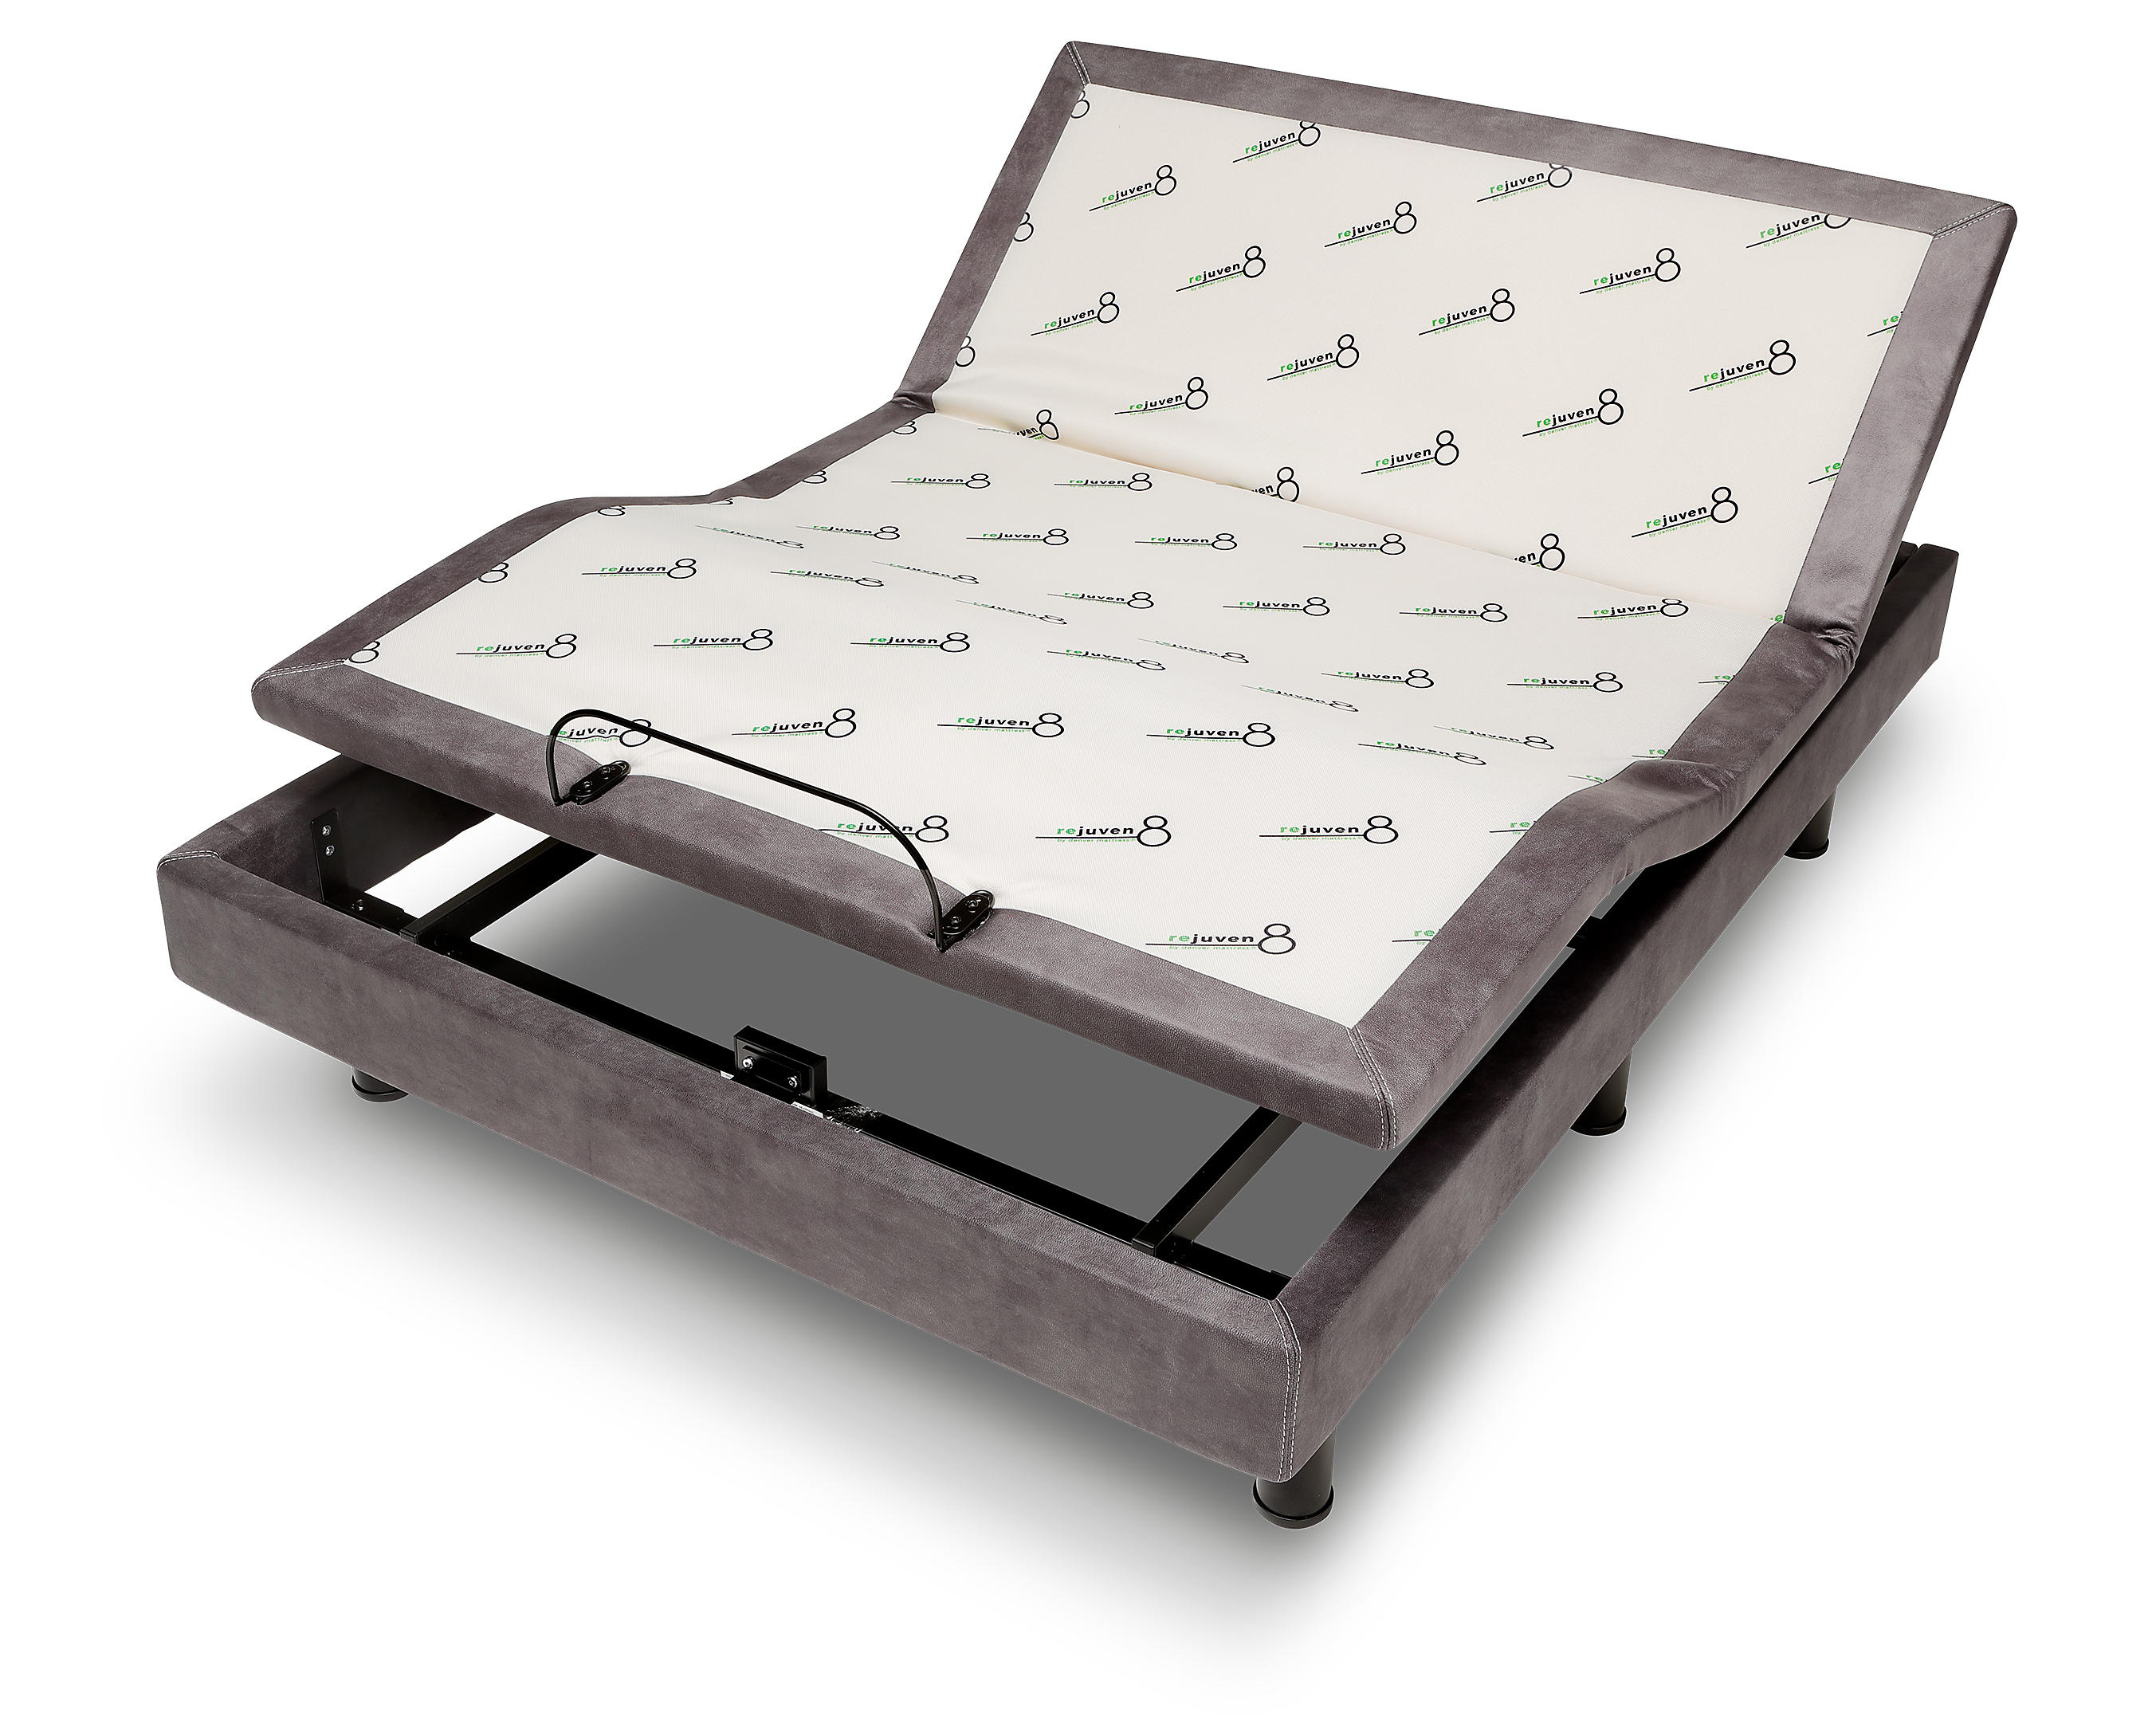 Adjustable Base, Queen Adjustable Bed Frame With Remote